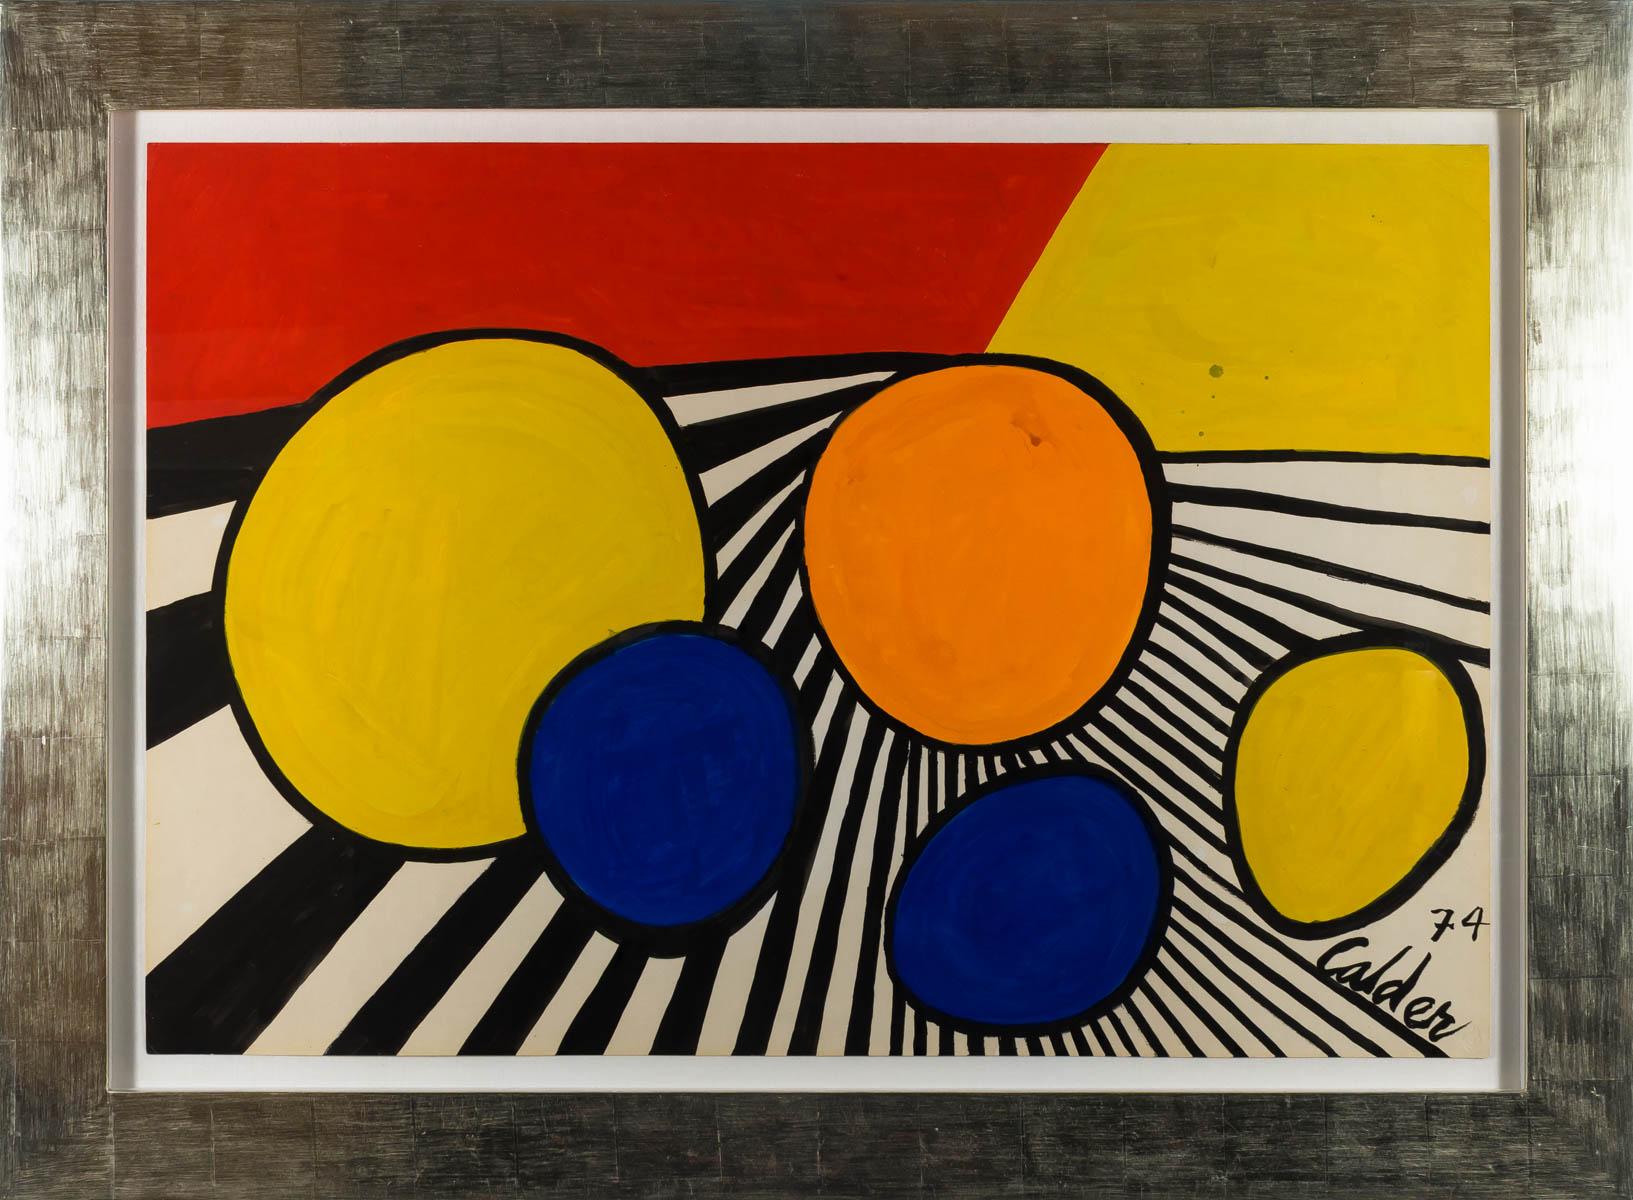 Bowling, 1974 (Moderne), Painting, von Alexander Calder